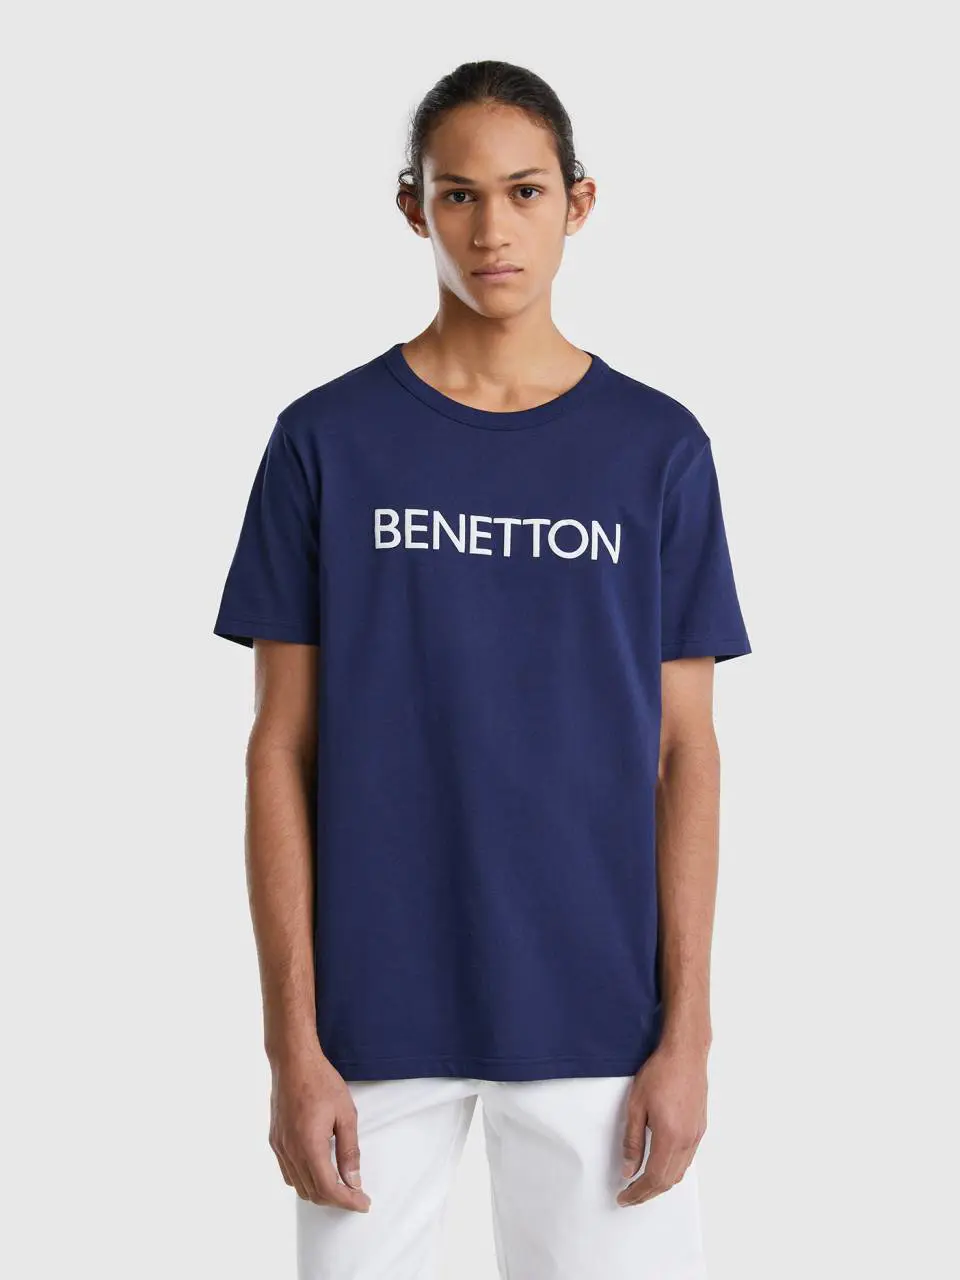 Benetton t-shirt in organic cotton with logo print. 1